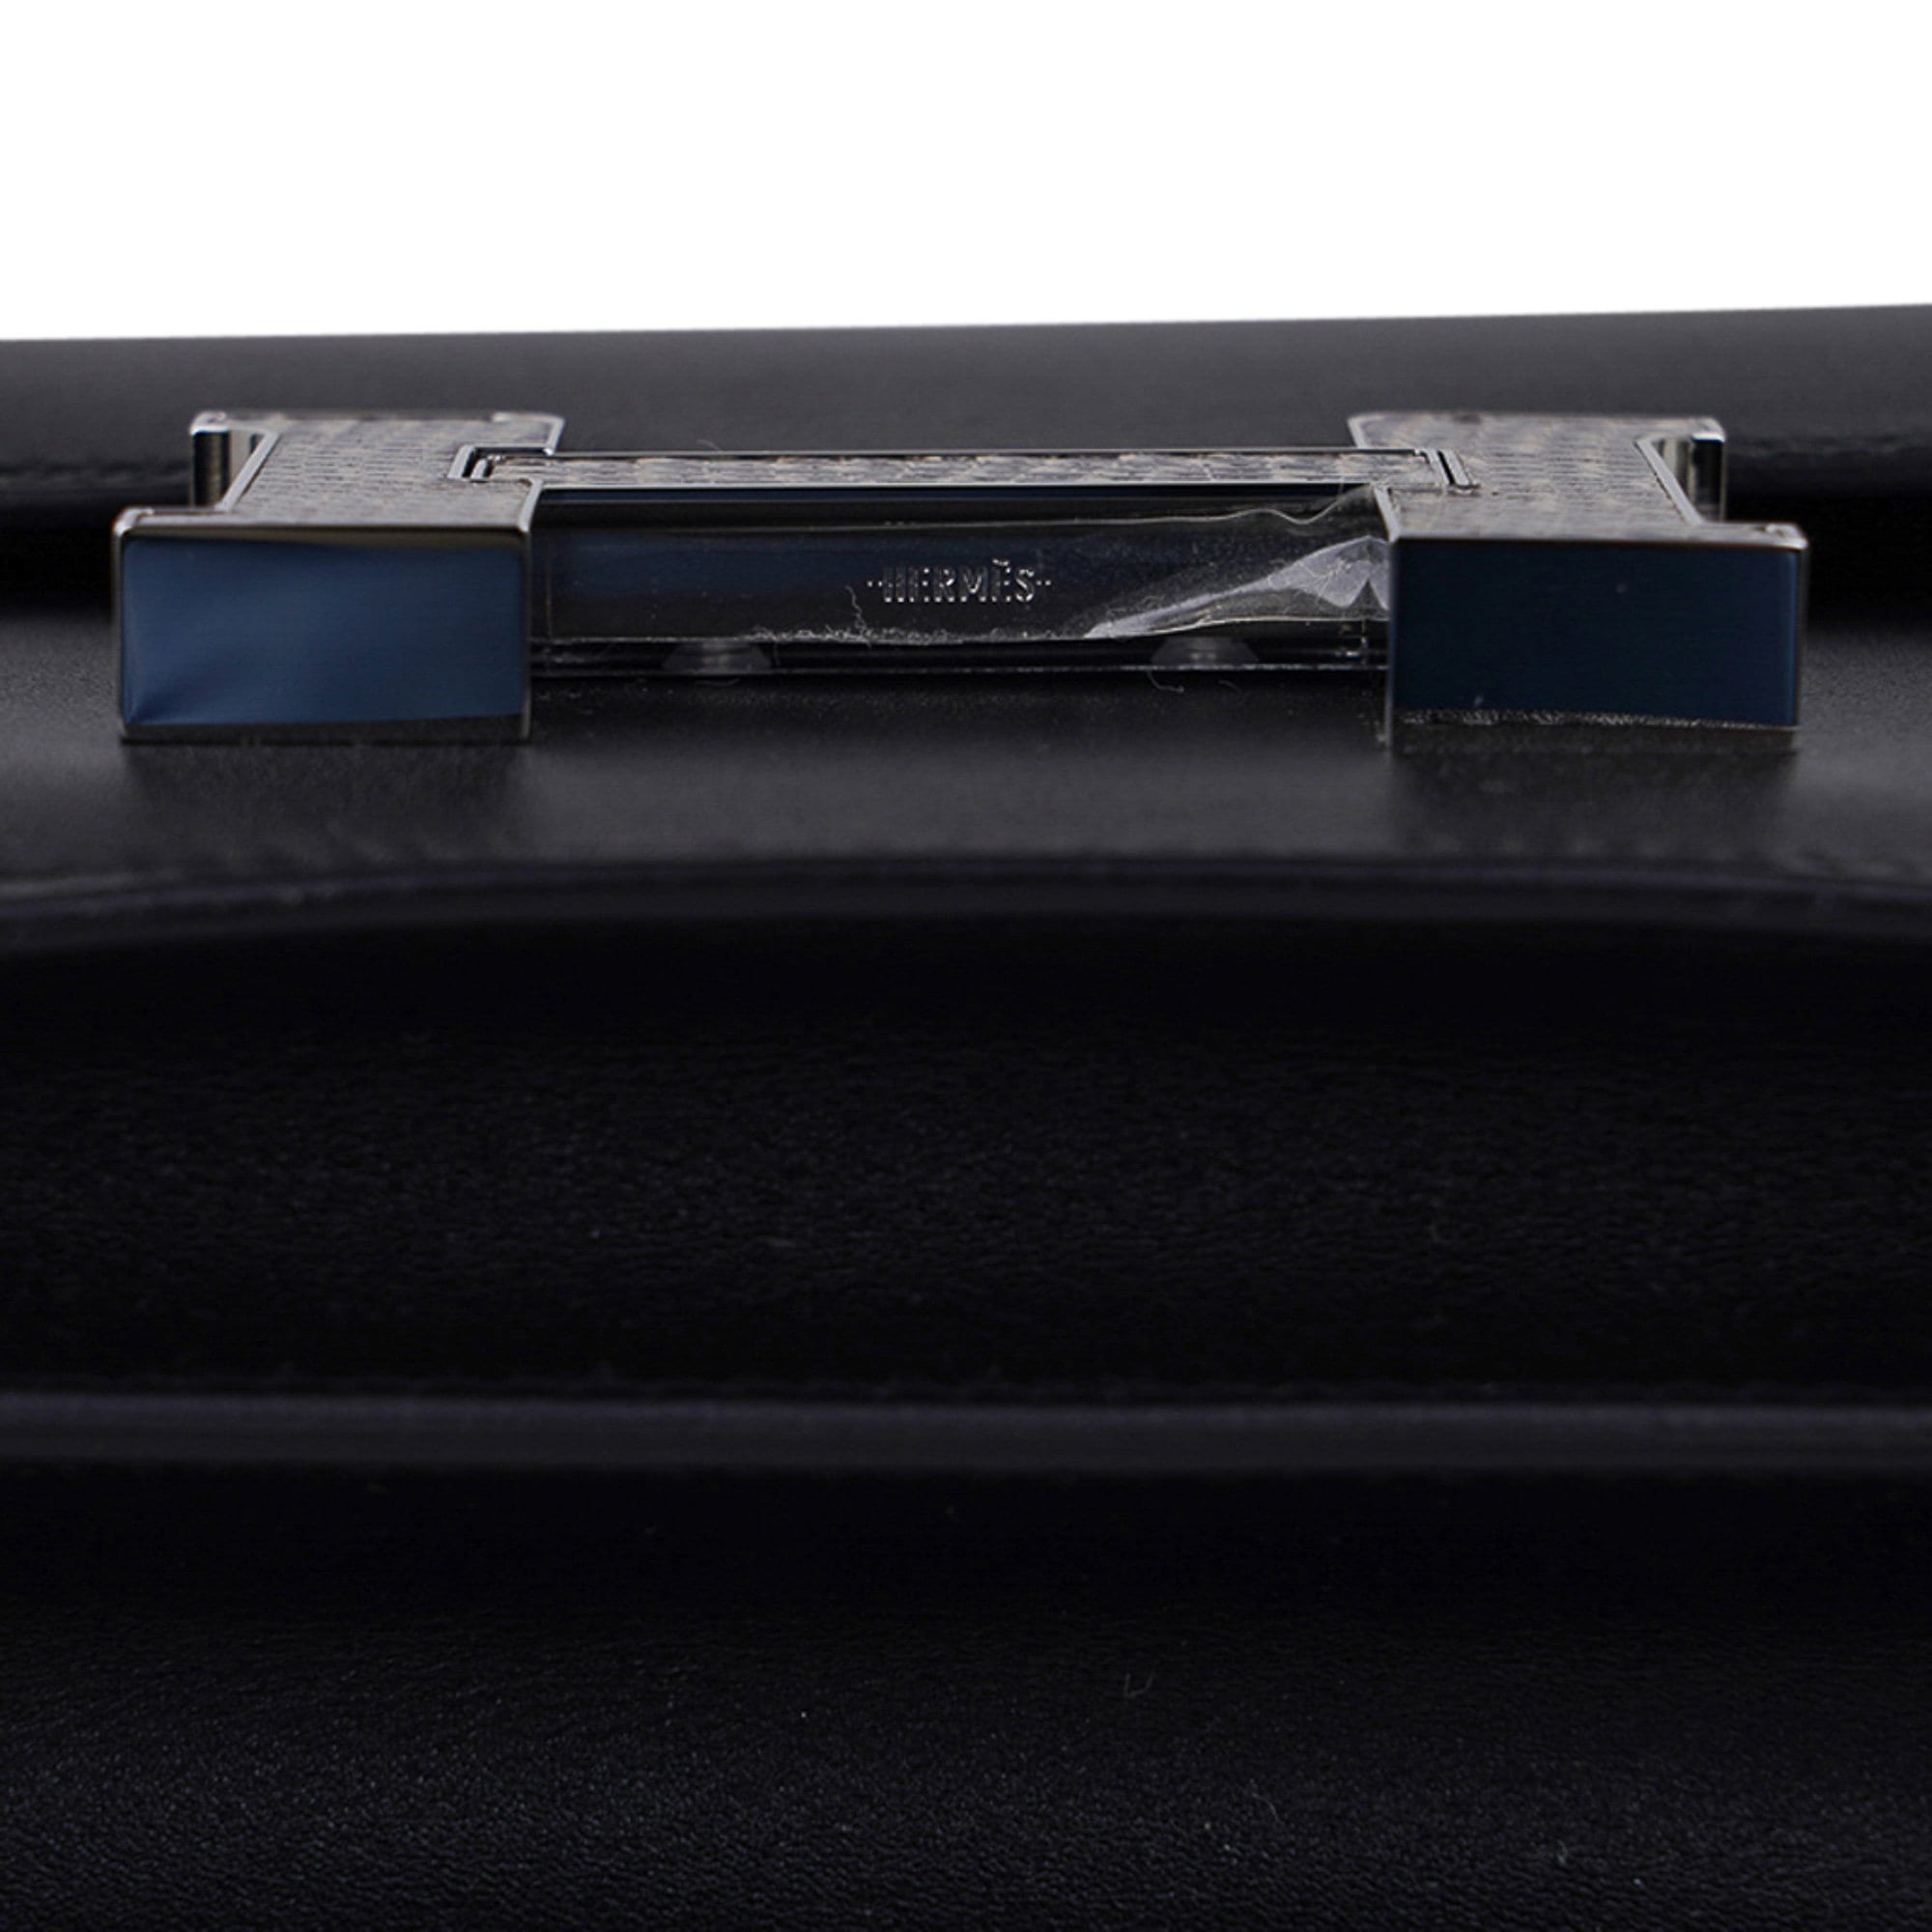 Hermès Ombre Constance 18cm of Varanus Salvator Lizard with Palladium  Hardware, Handbags & Accessories Online, Ecommerce Retail